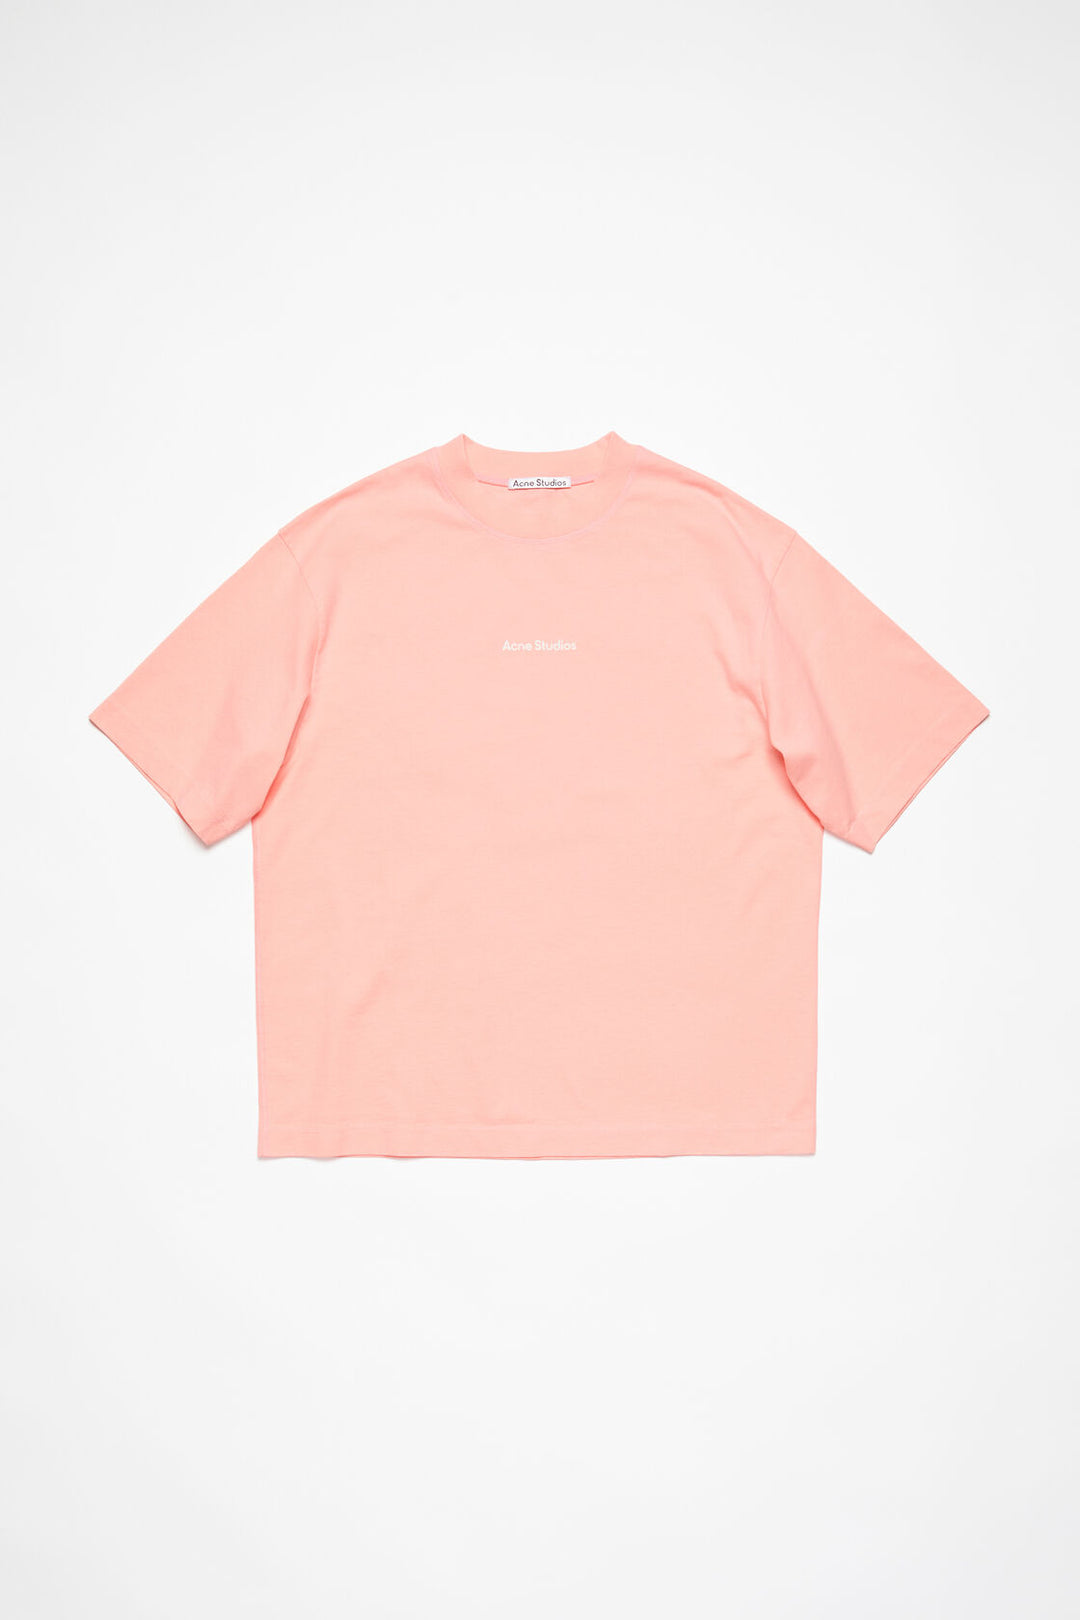 ACNE STUDIOS - T-Shirt Logo Pale Pink - Dale